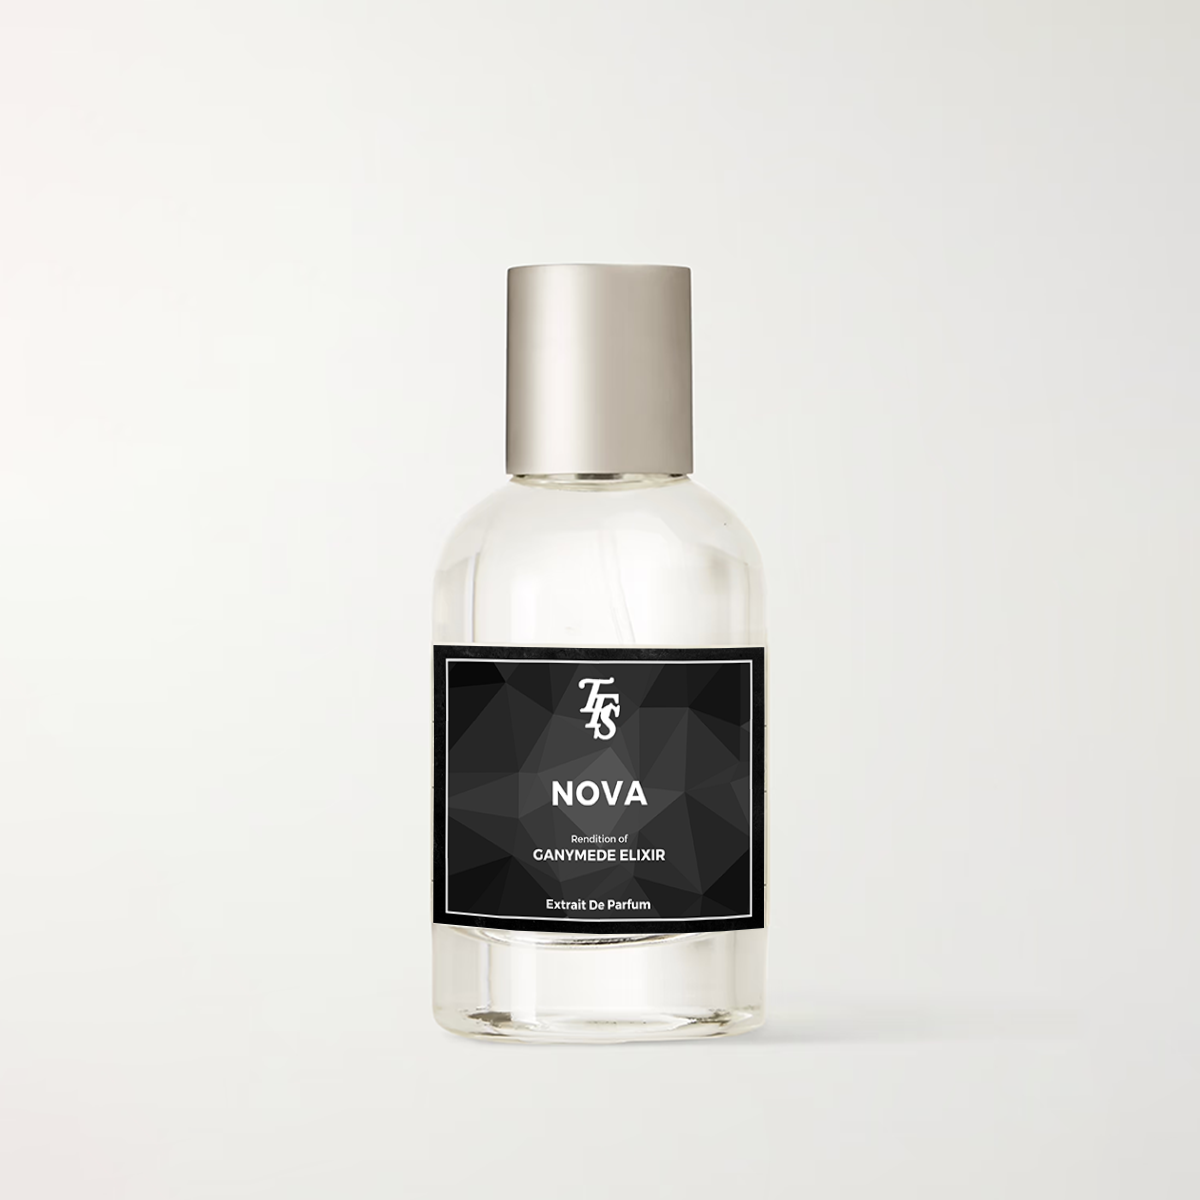 Nova | Rendition of Ganymede Elixir